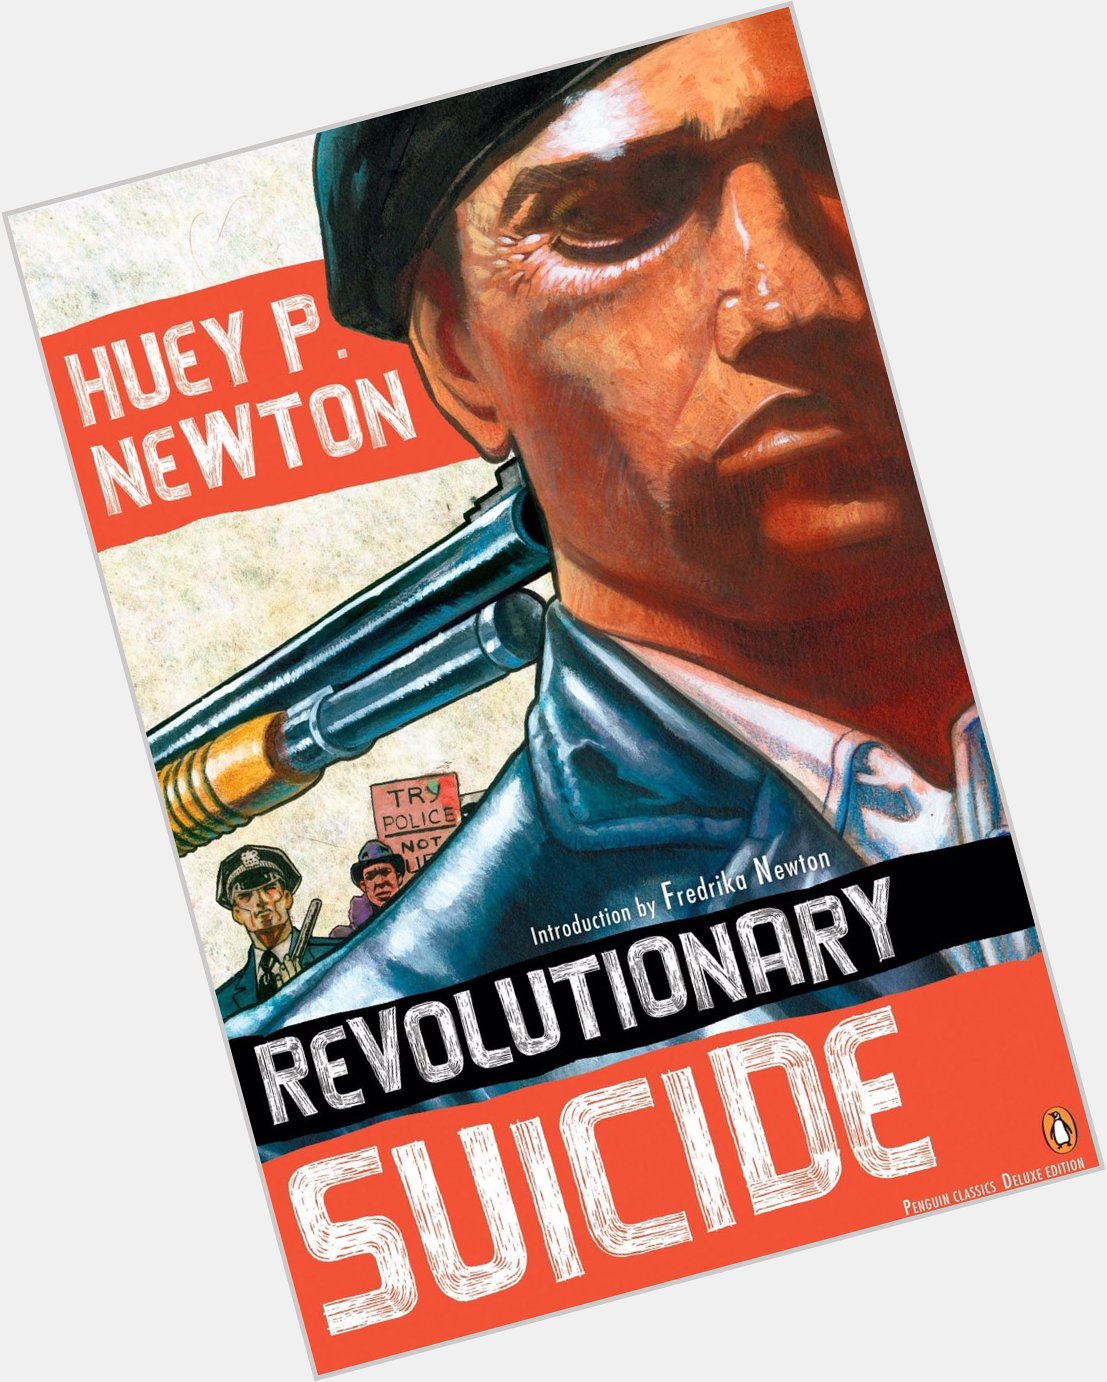 Happy Birthday to Huey P. Newton, I just ordered Revolutionary Suicide. 